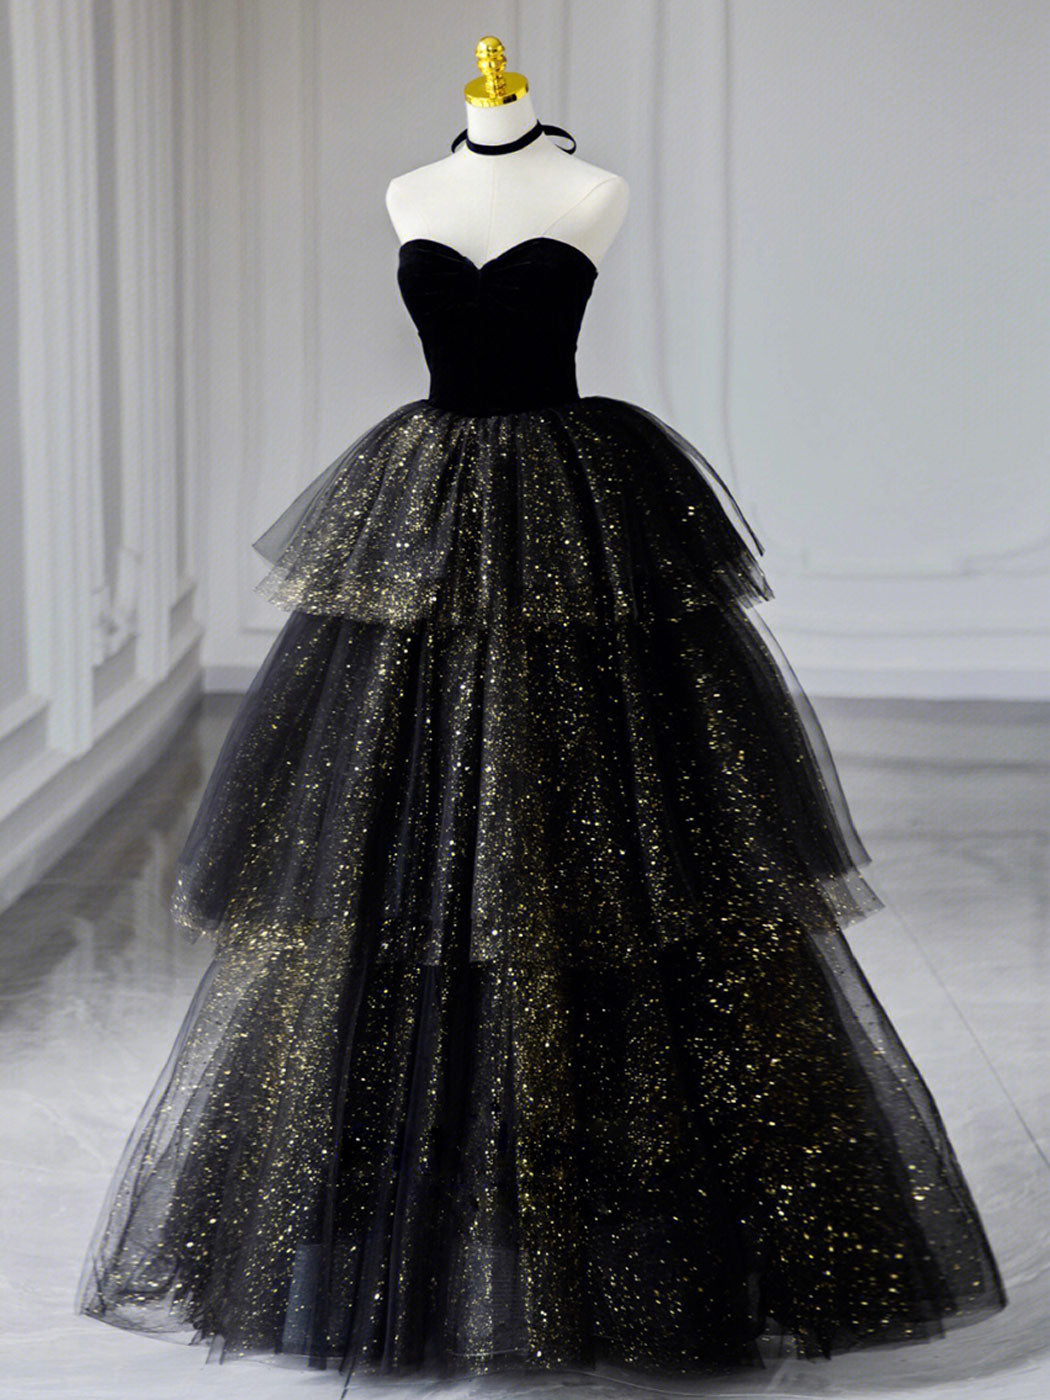 Black Sweetheart Neck Tulle Long Prom Dress, Black Formal Evening Dress